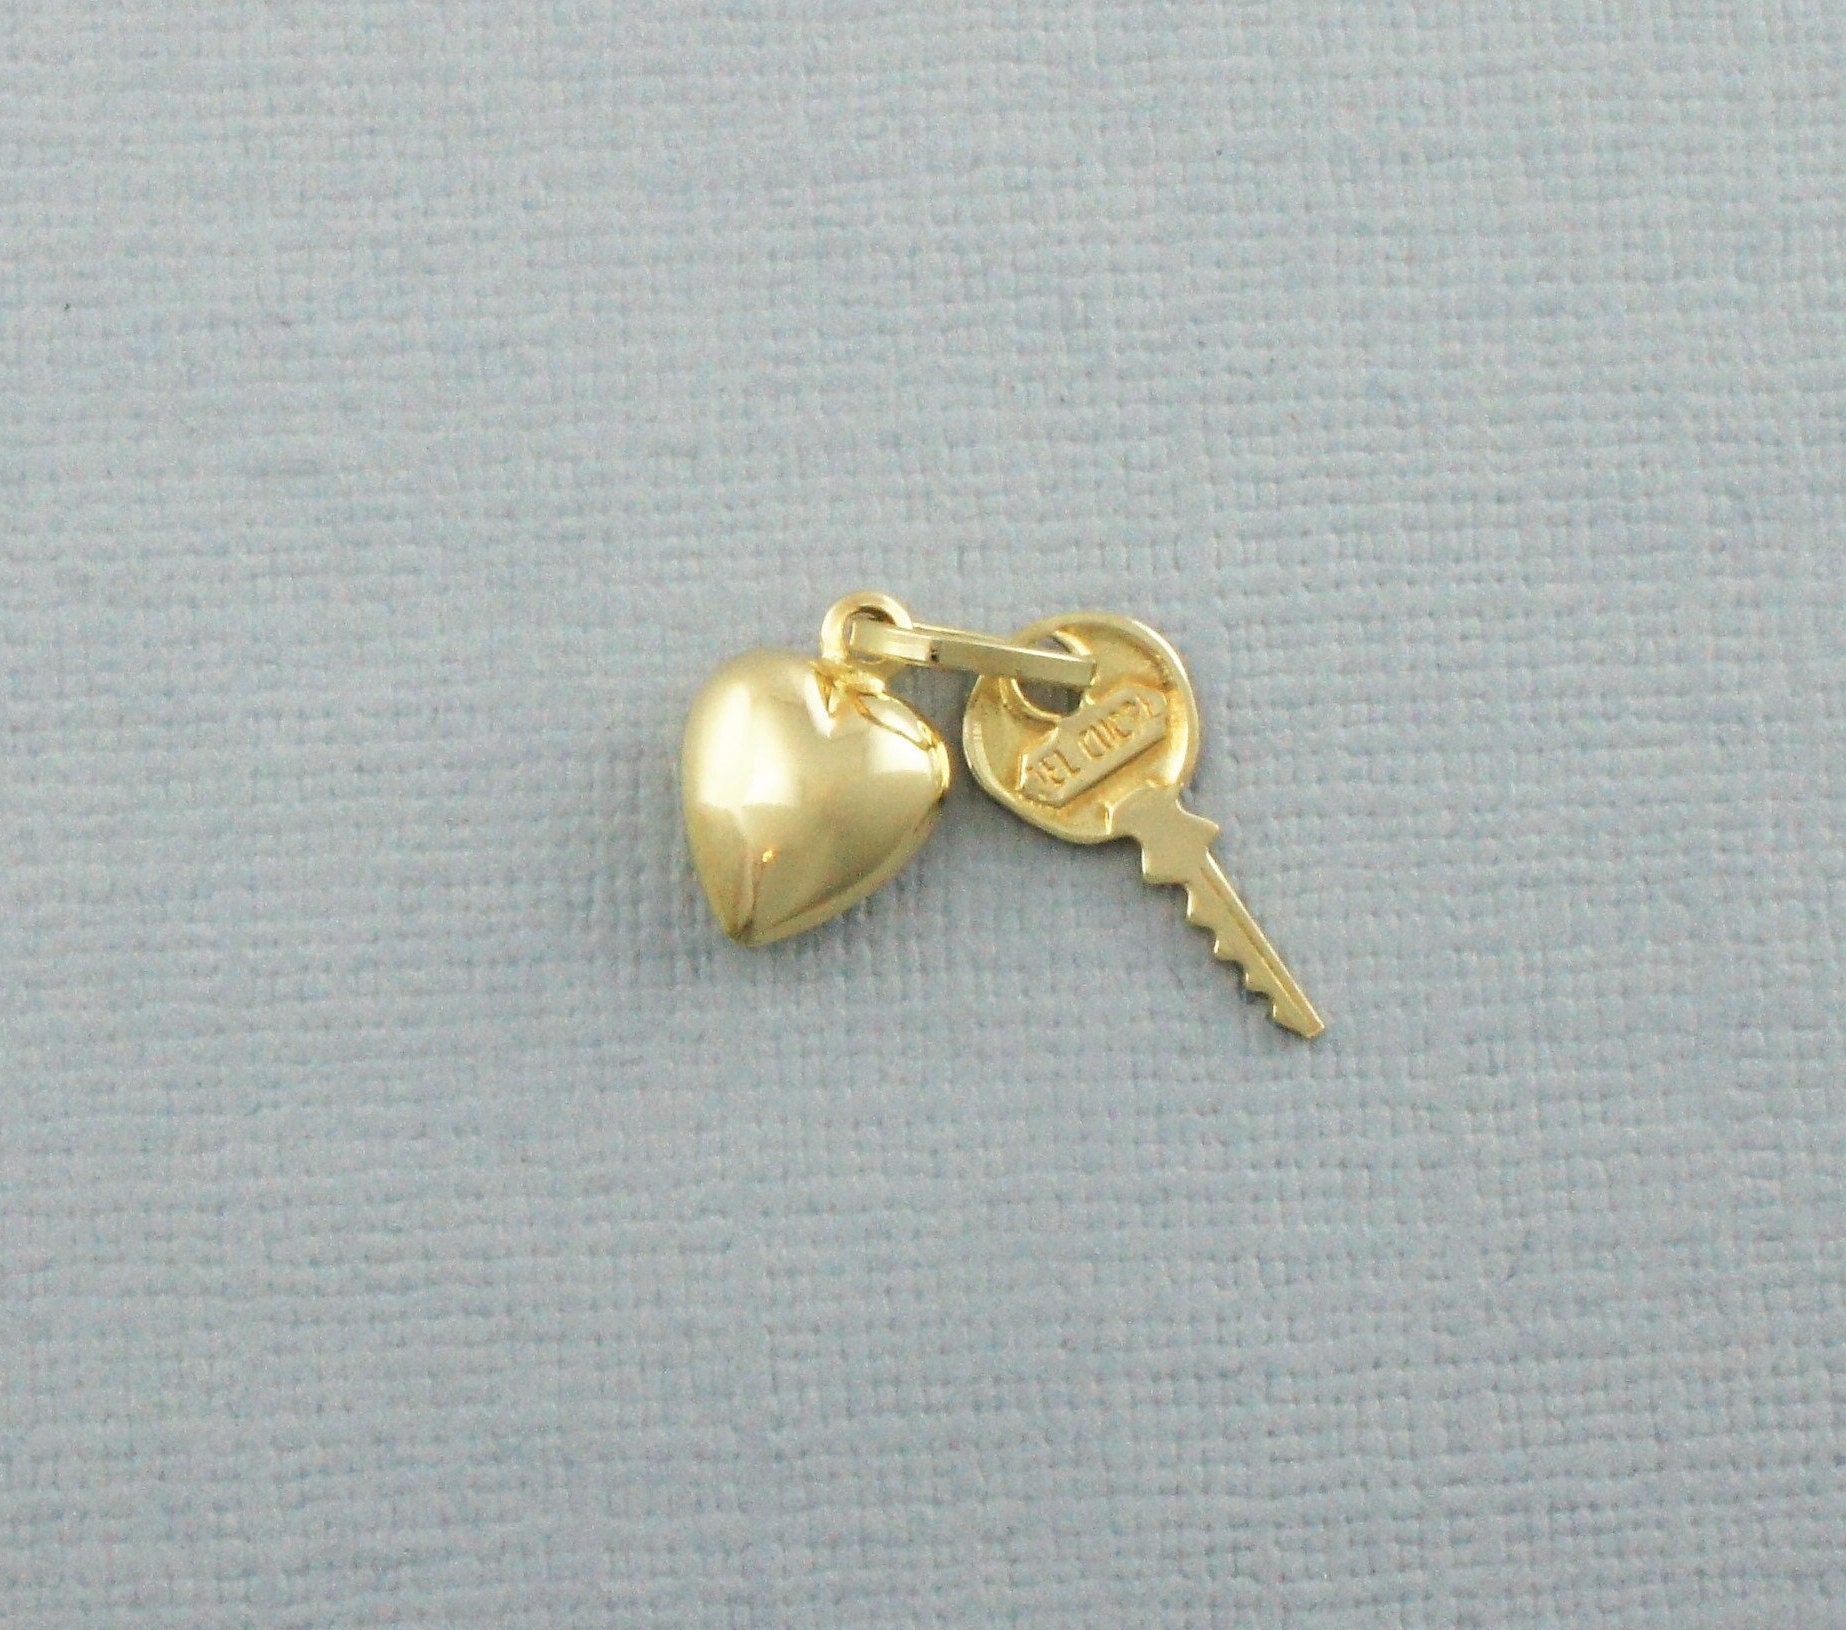 KitBeads 20pcs 18k Real Gold Plated Key Charms Brass Key Lock Charms Small  Gold Key Shape Charms for Jewelry Making Bracelets Necklace Bulk